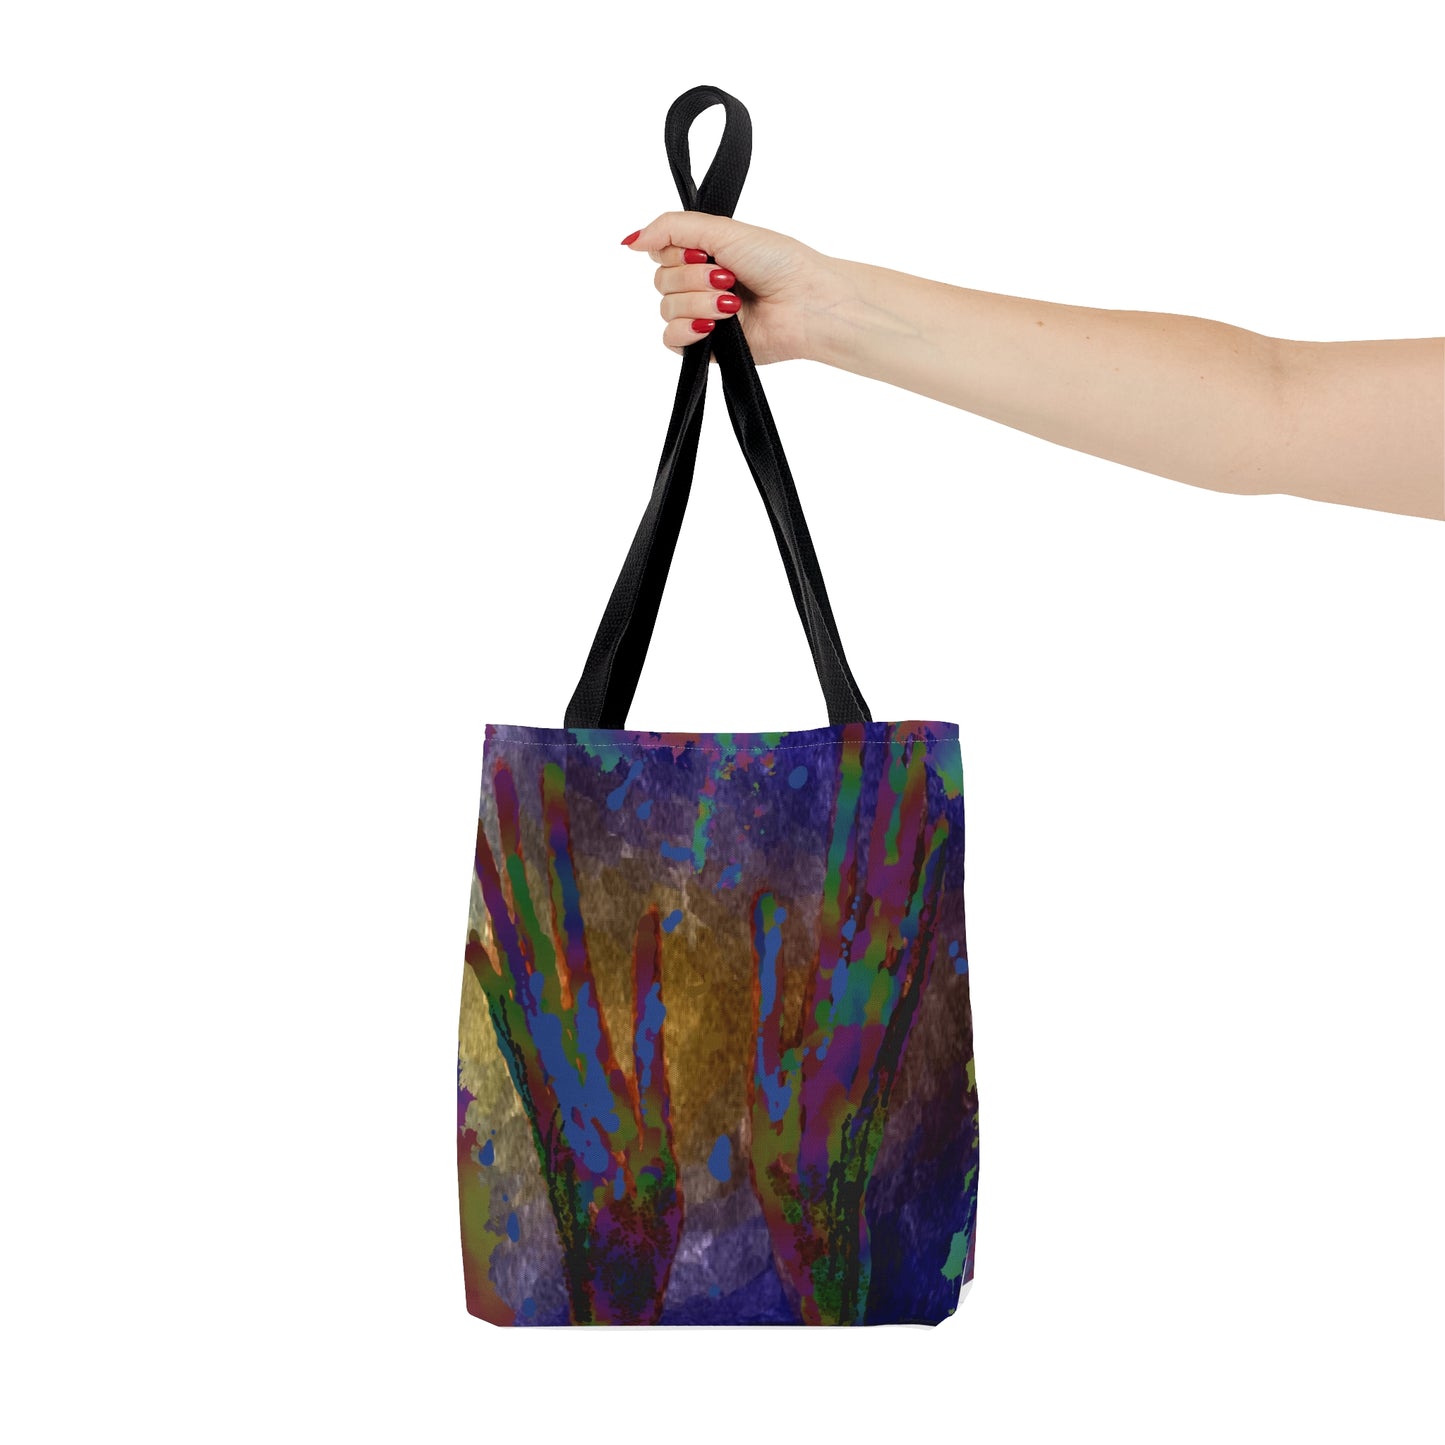 Impressionism hands tote bag